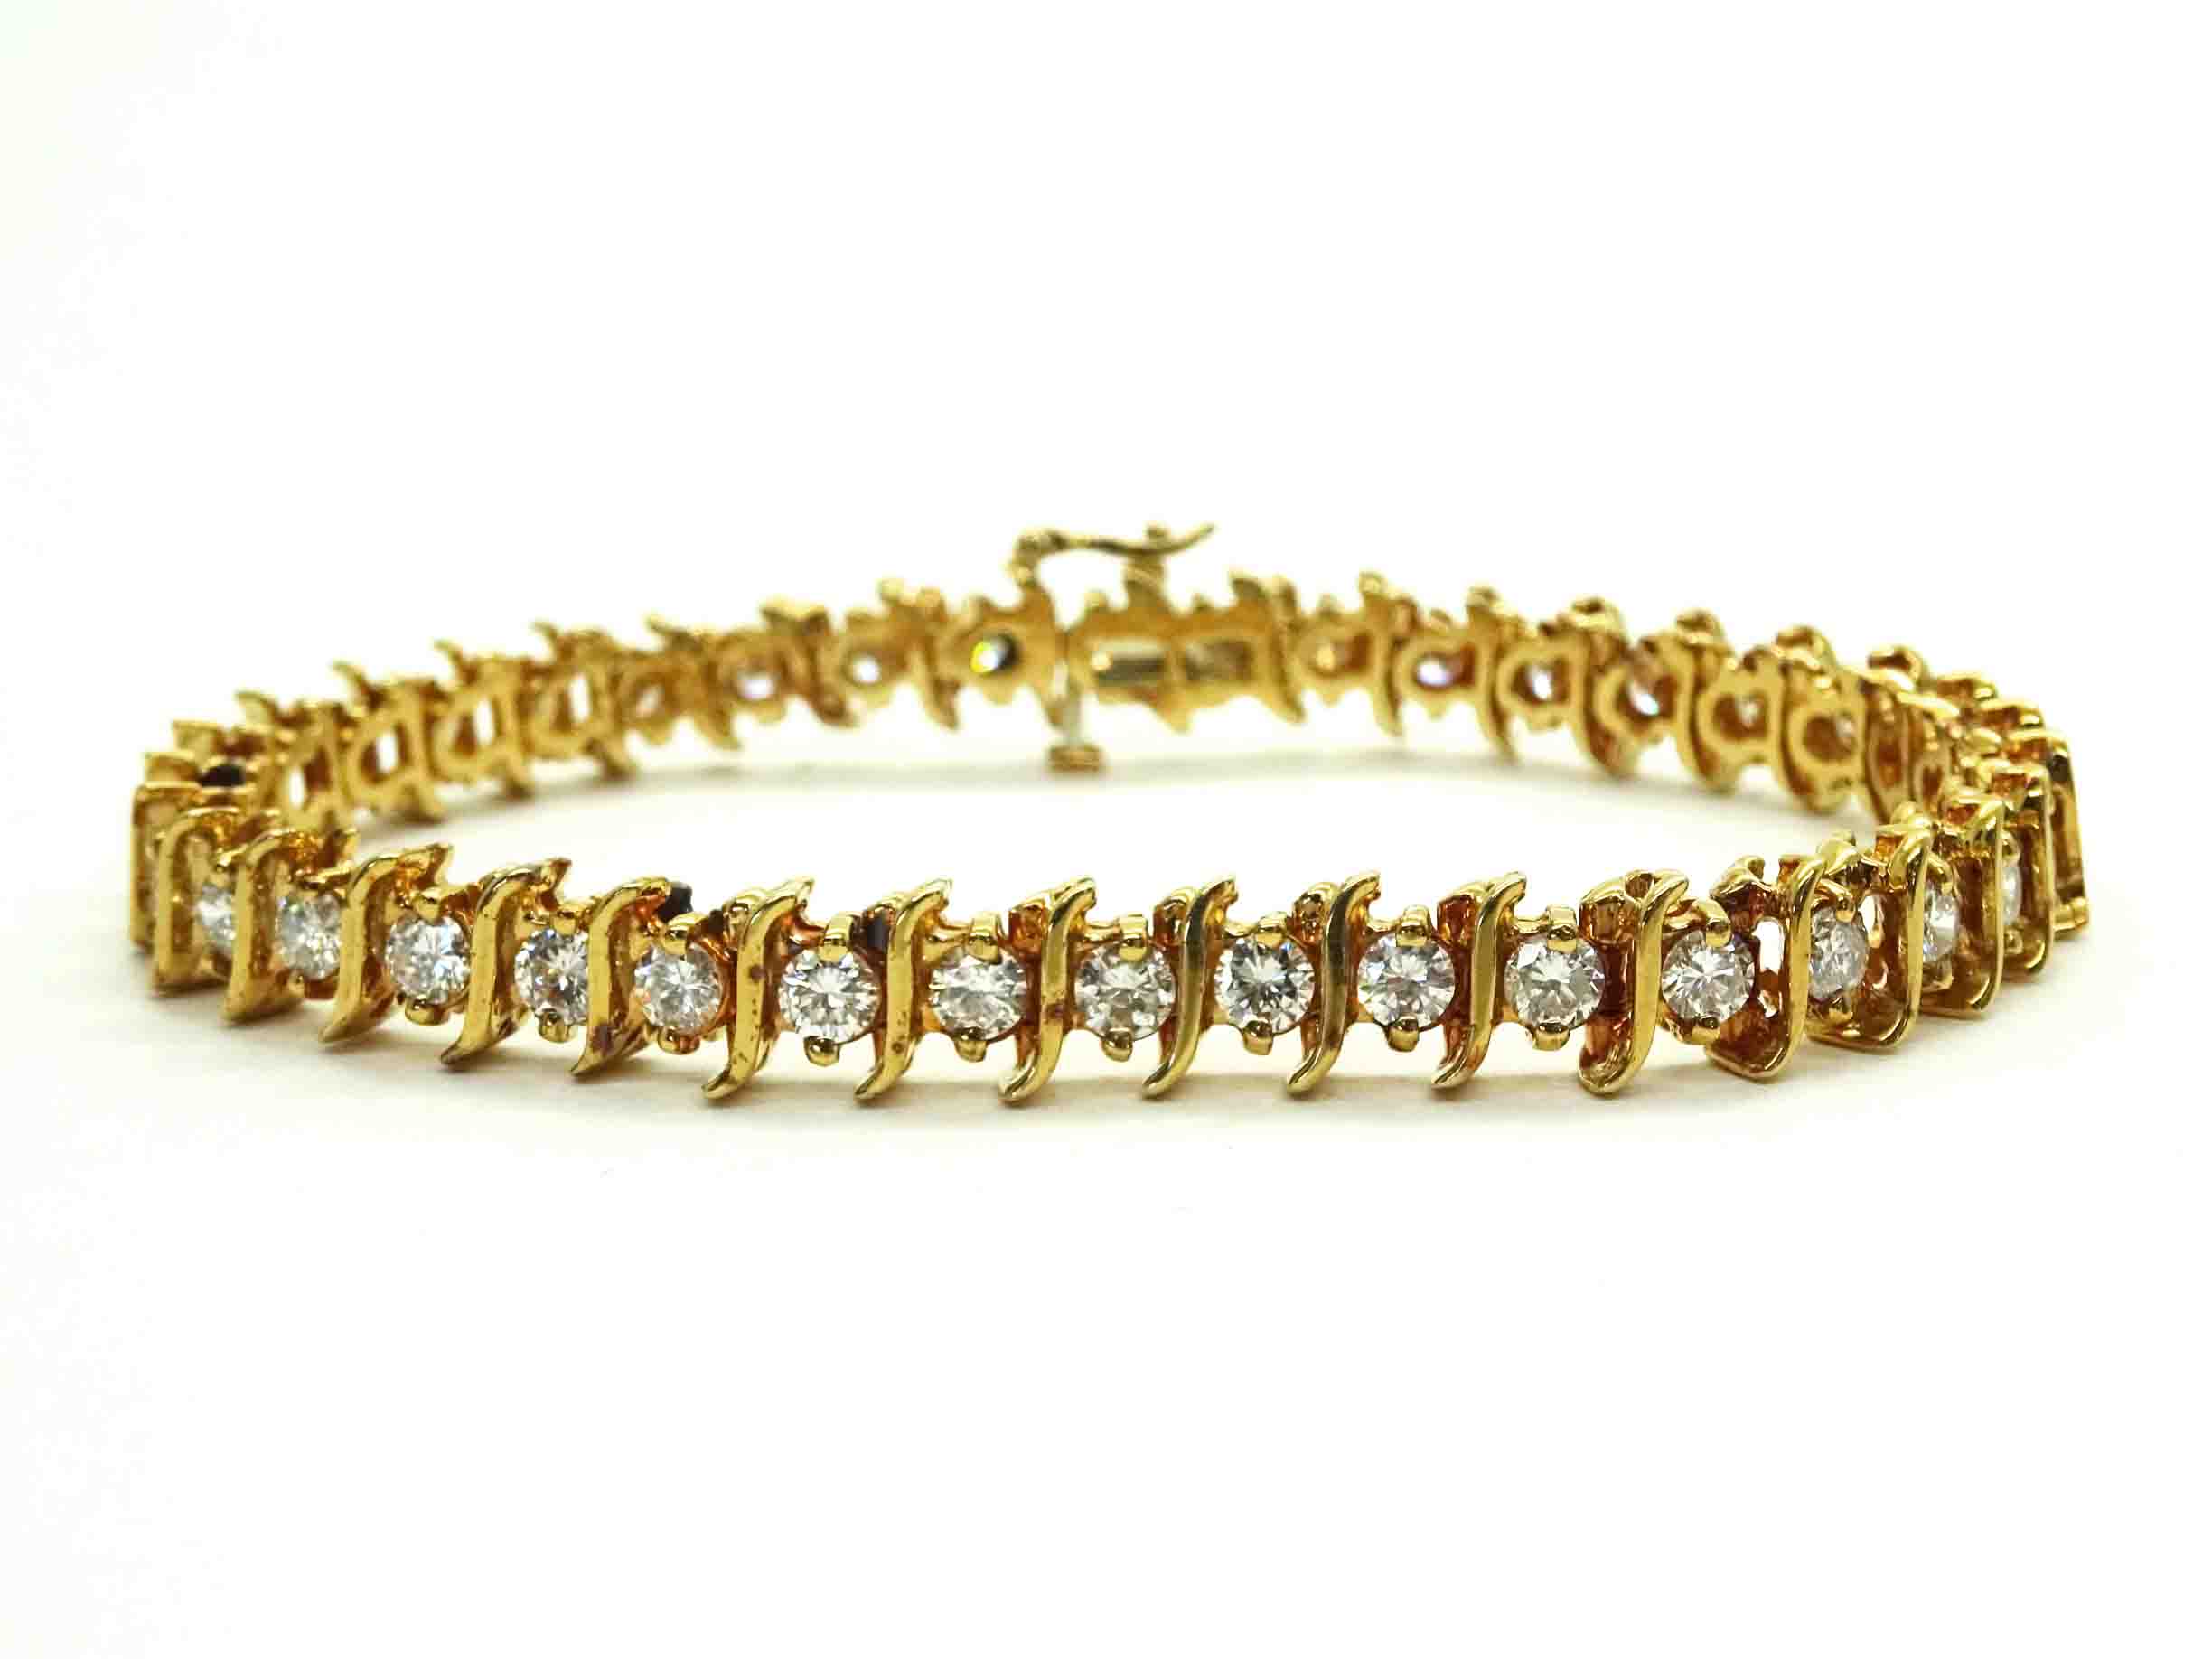 5mm Gold Bead Bracelet 14K Yellow Gold +$260 / 7